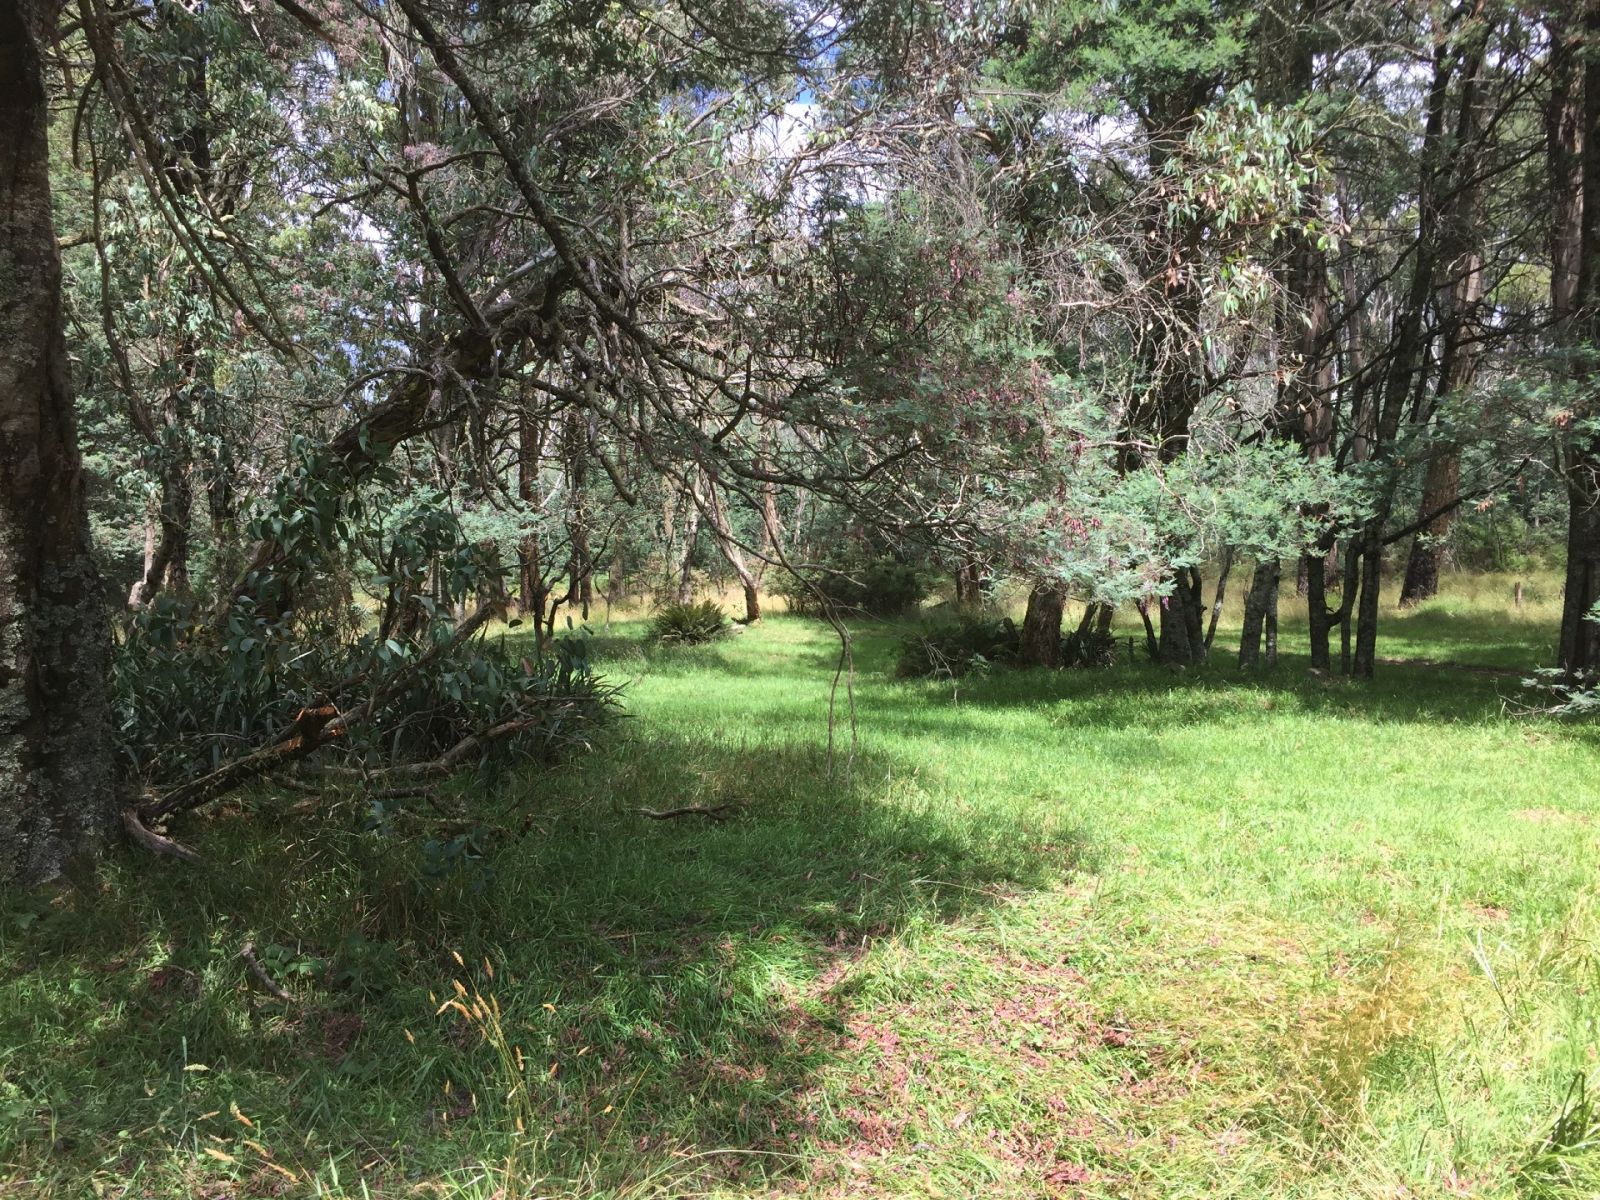 A grassy area with shady trees